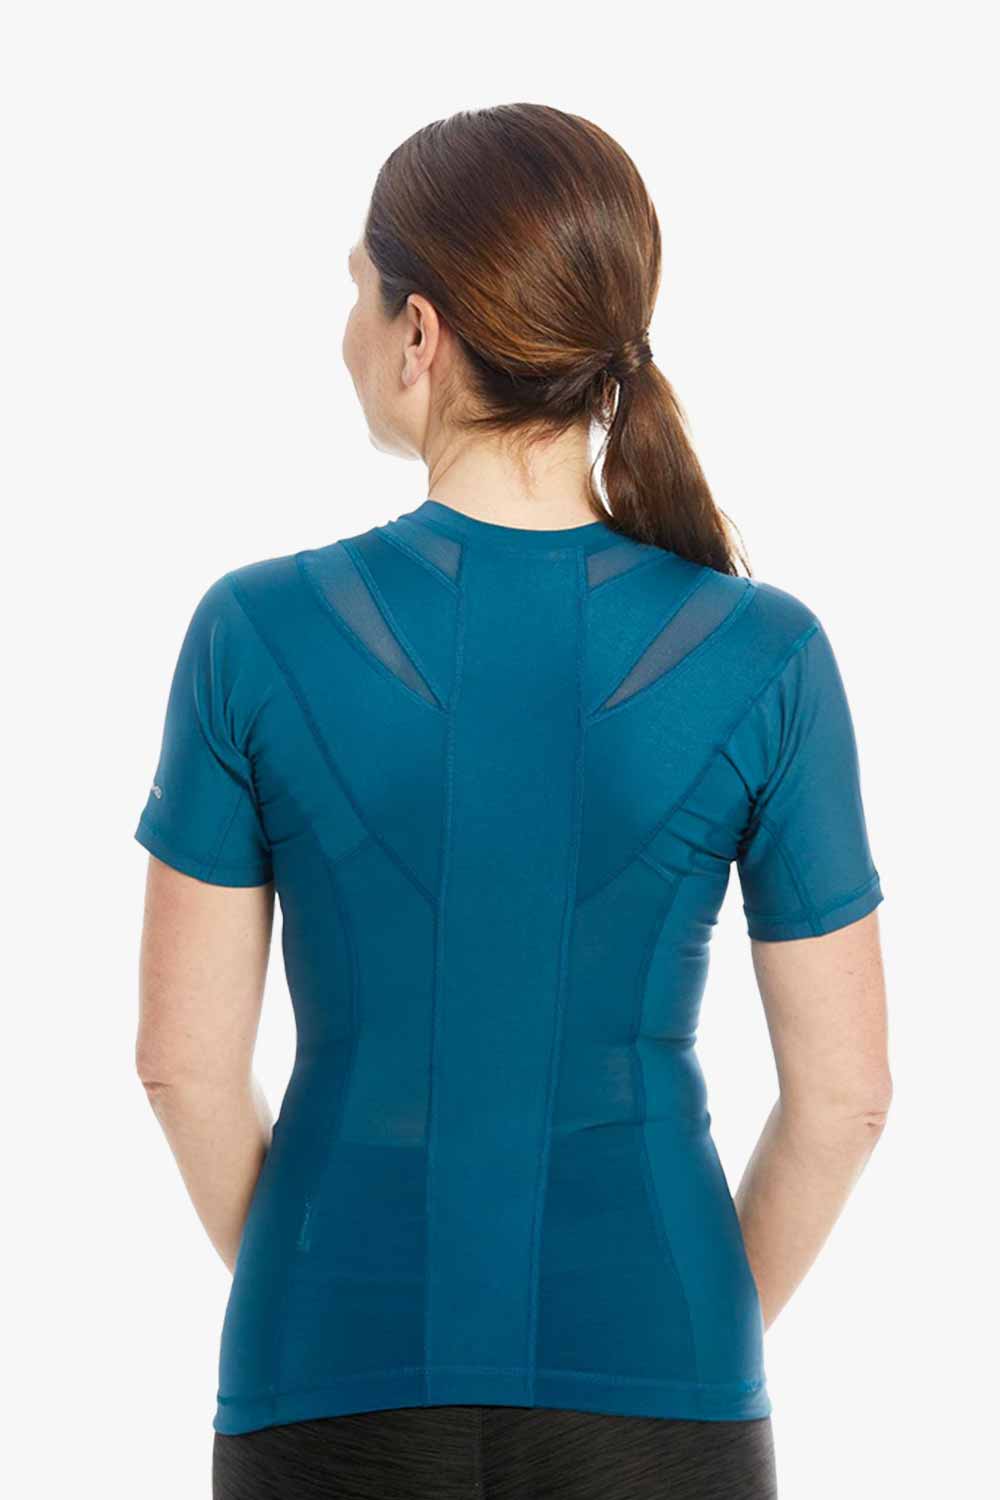 Women's Posture Shirt™ - Blau